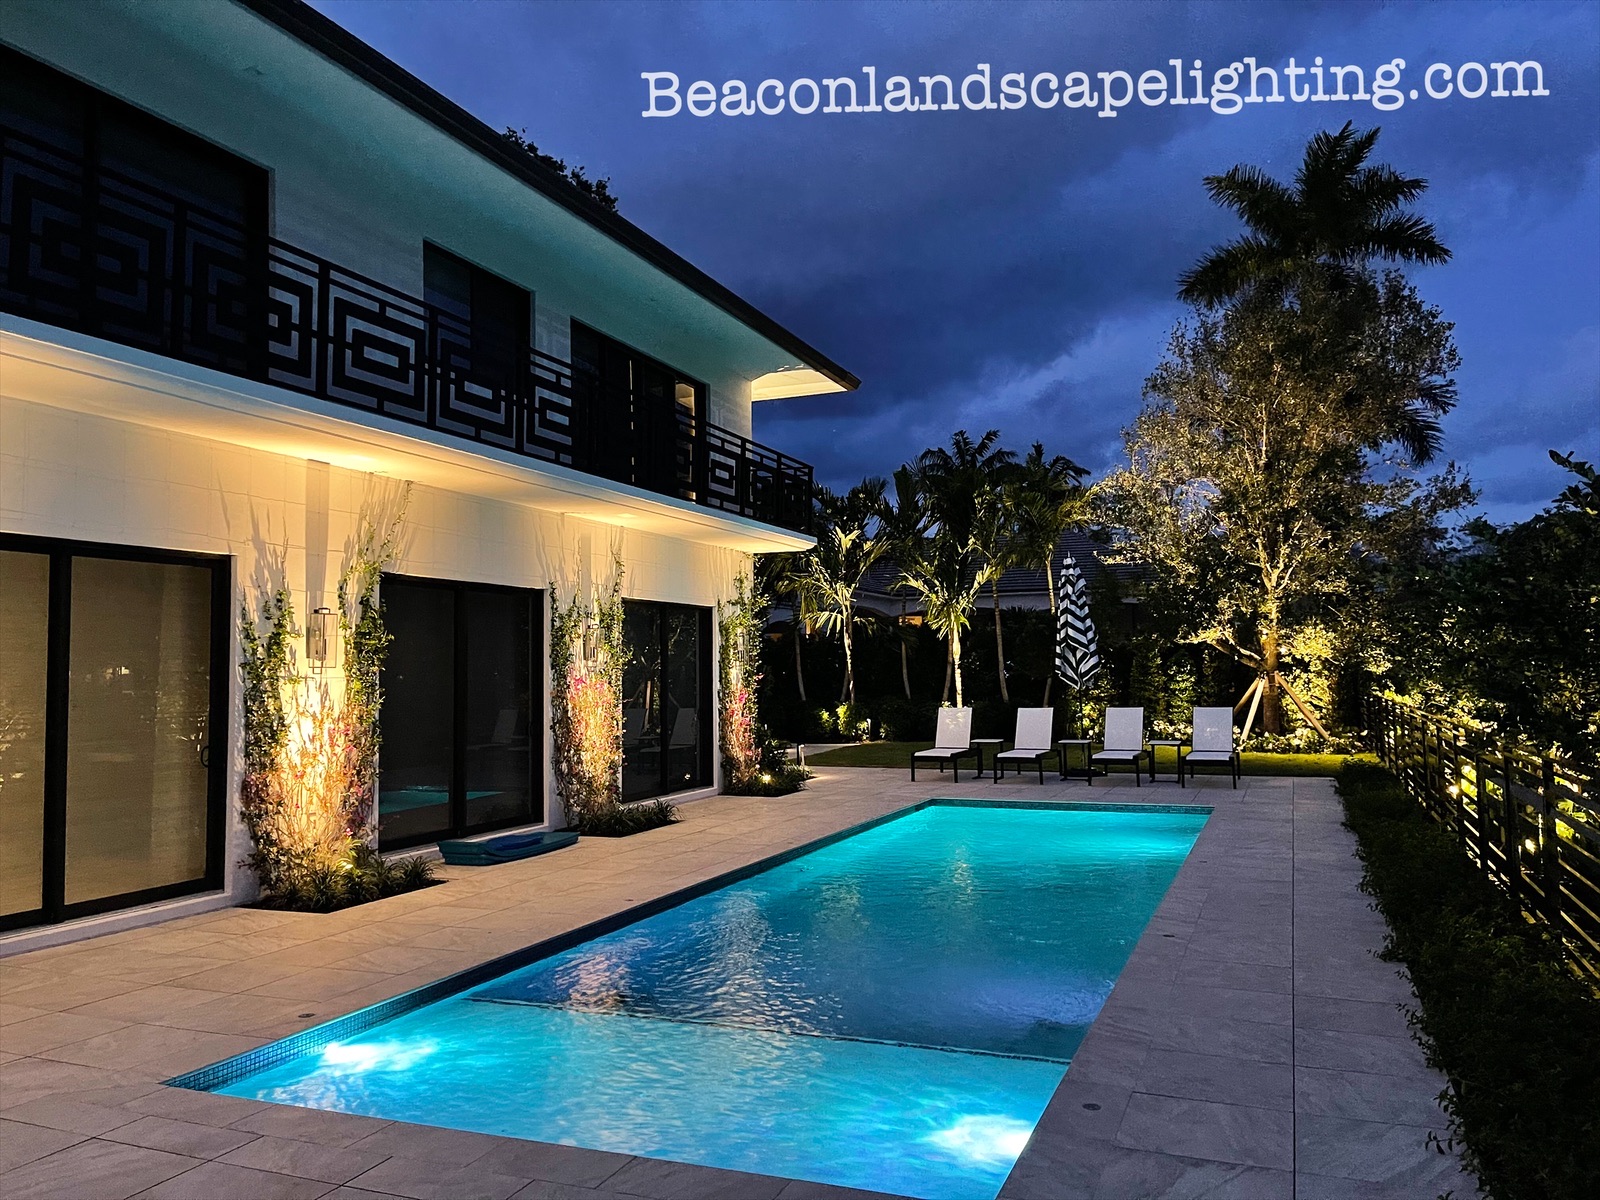 jupiter pool patio landscape lighting